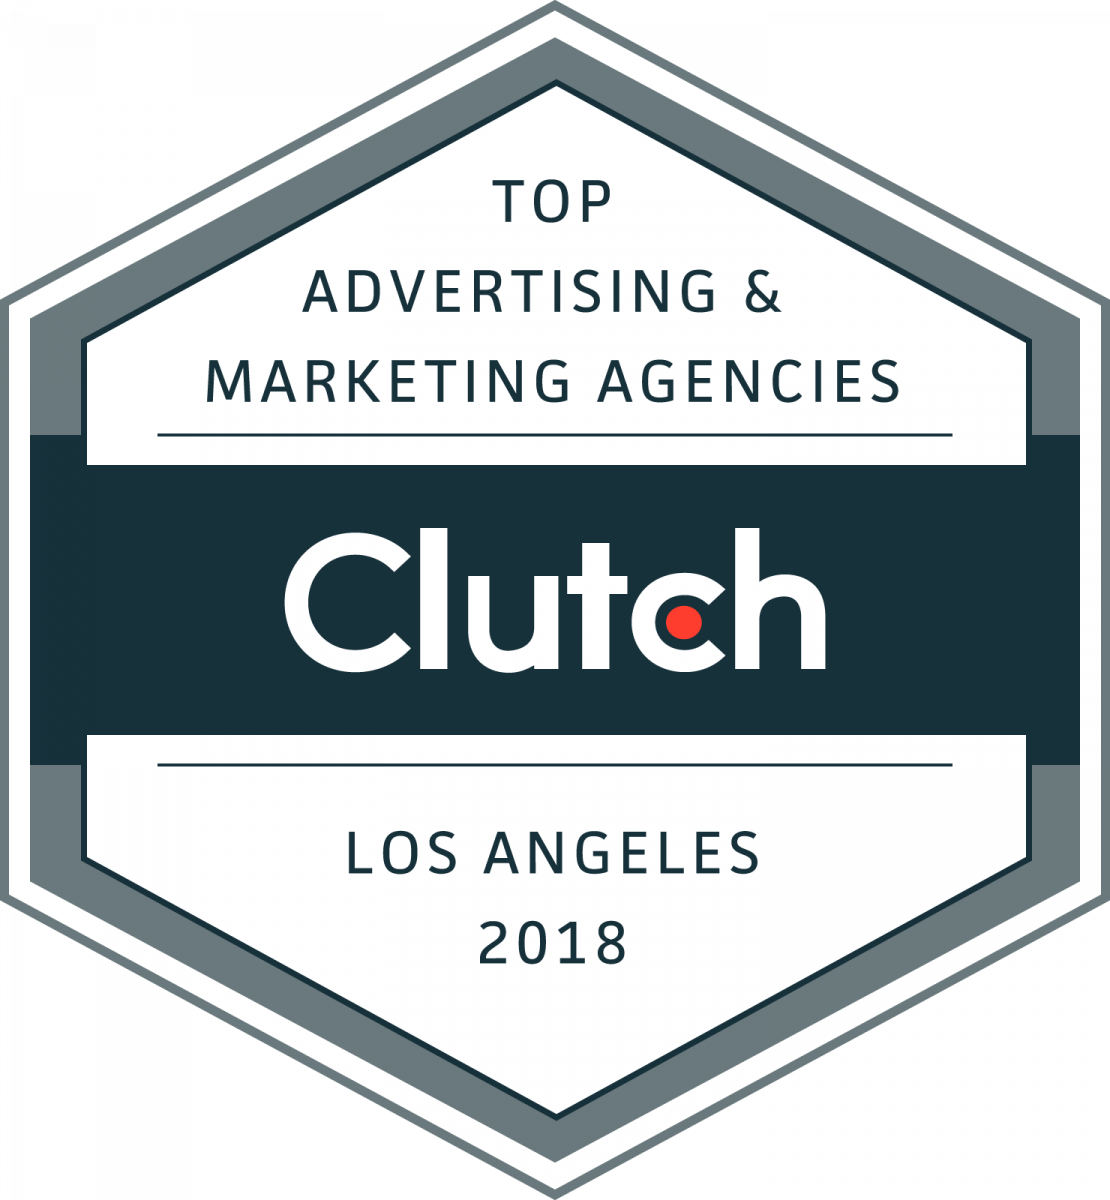 Top Advertising & Marketing Agencies Los Angeles Badge 2018